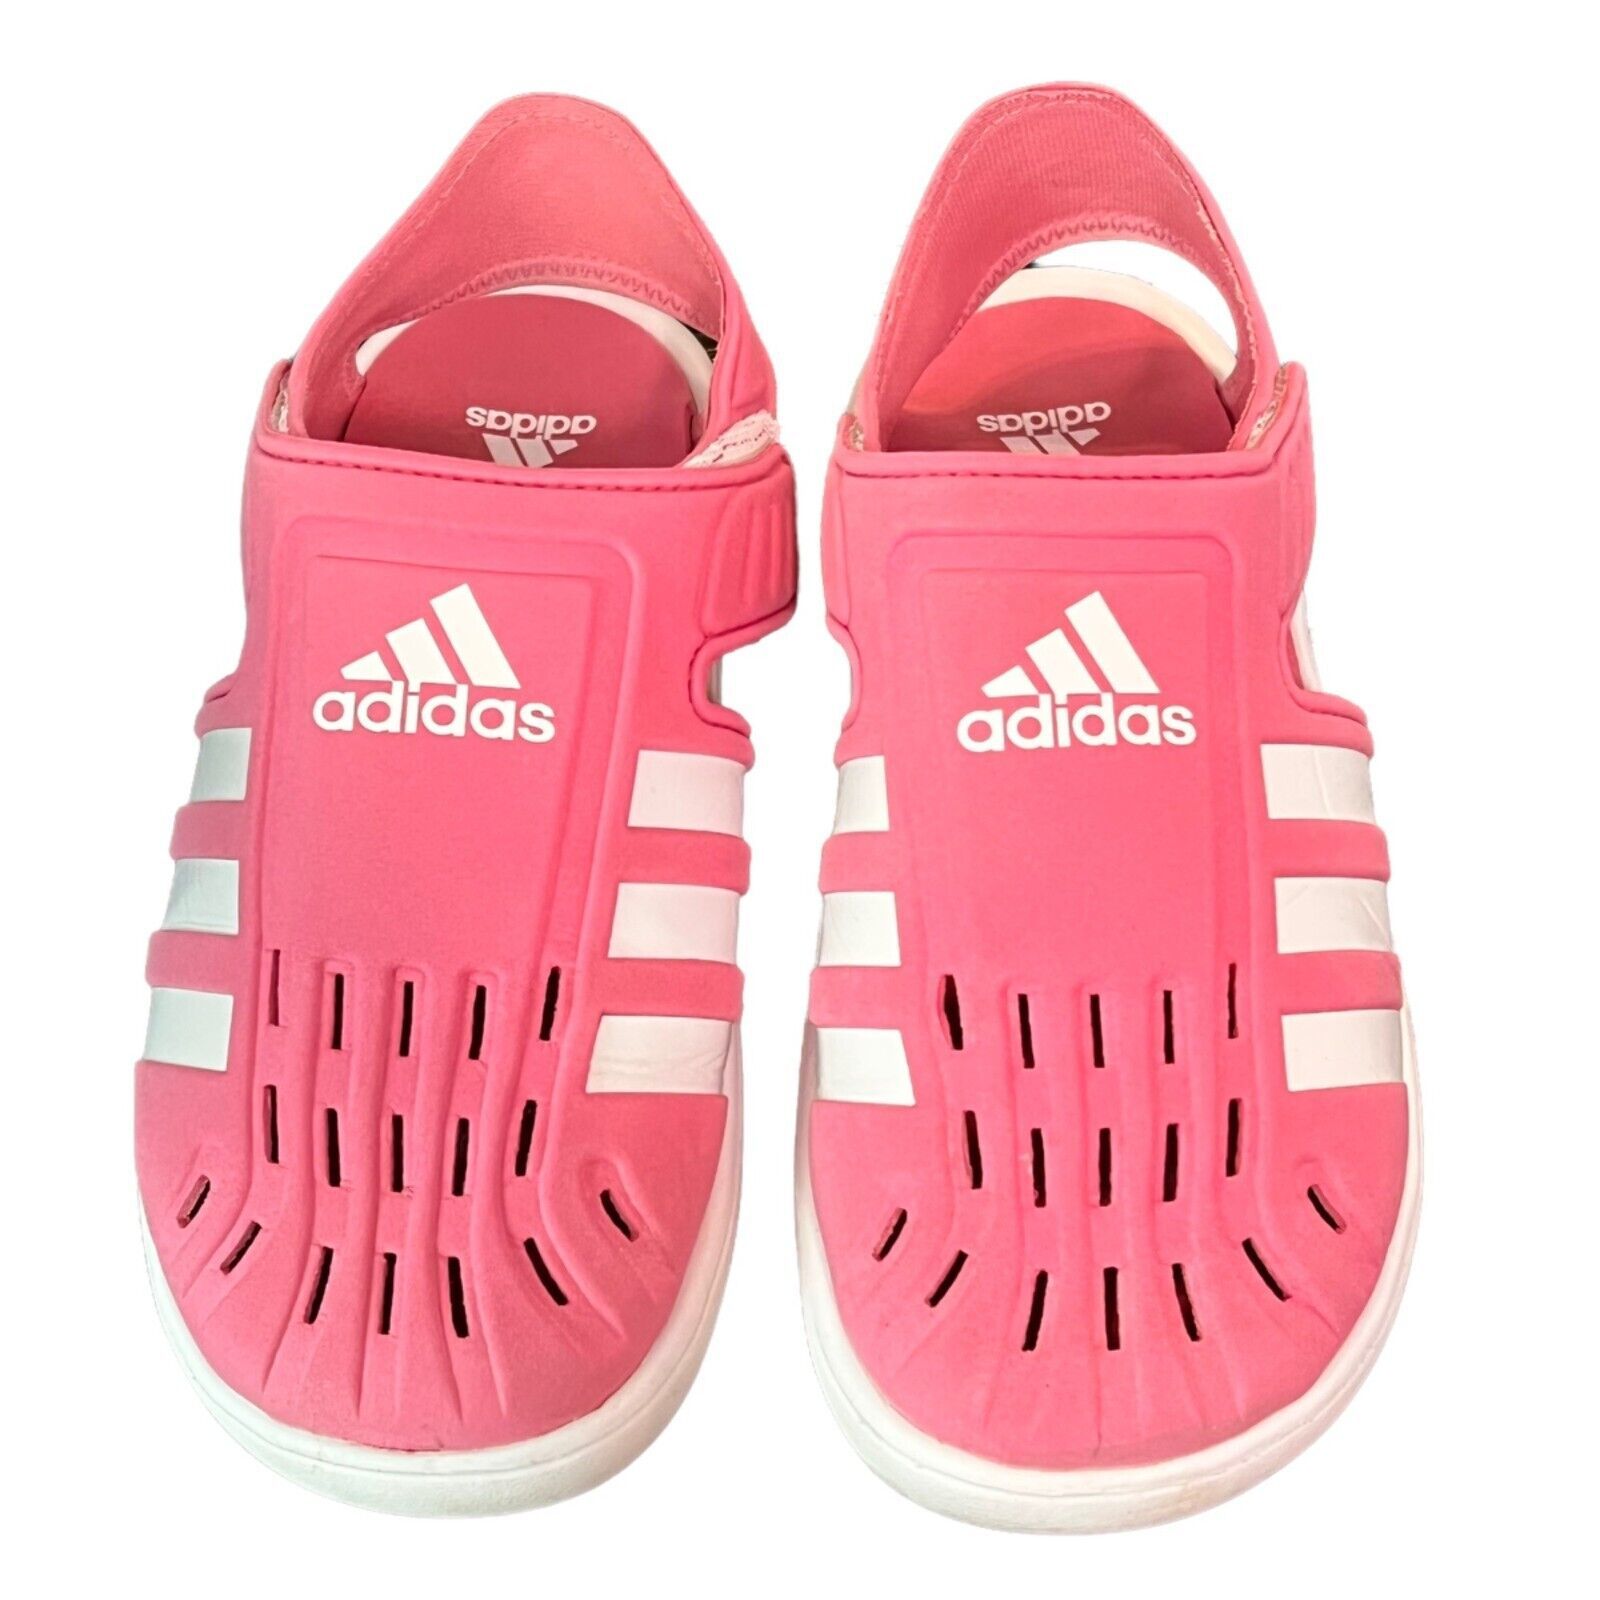 Adidas Pink Deck Sandals Waterproof Rubber Sz 2Y Girls - $14.40